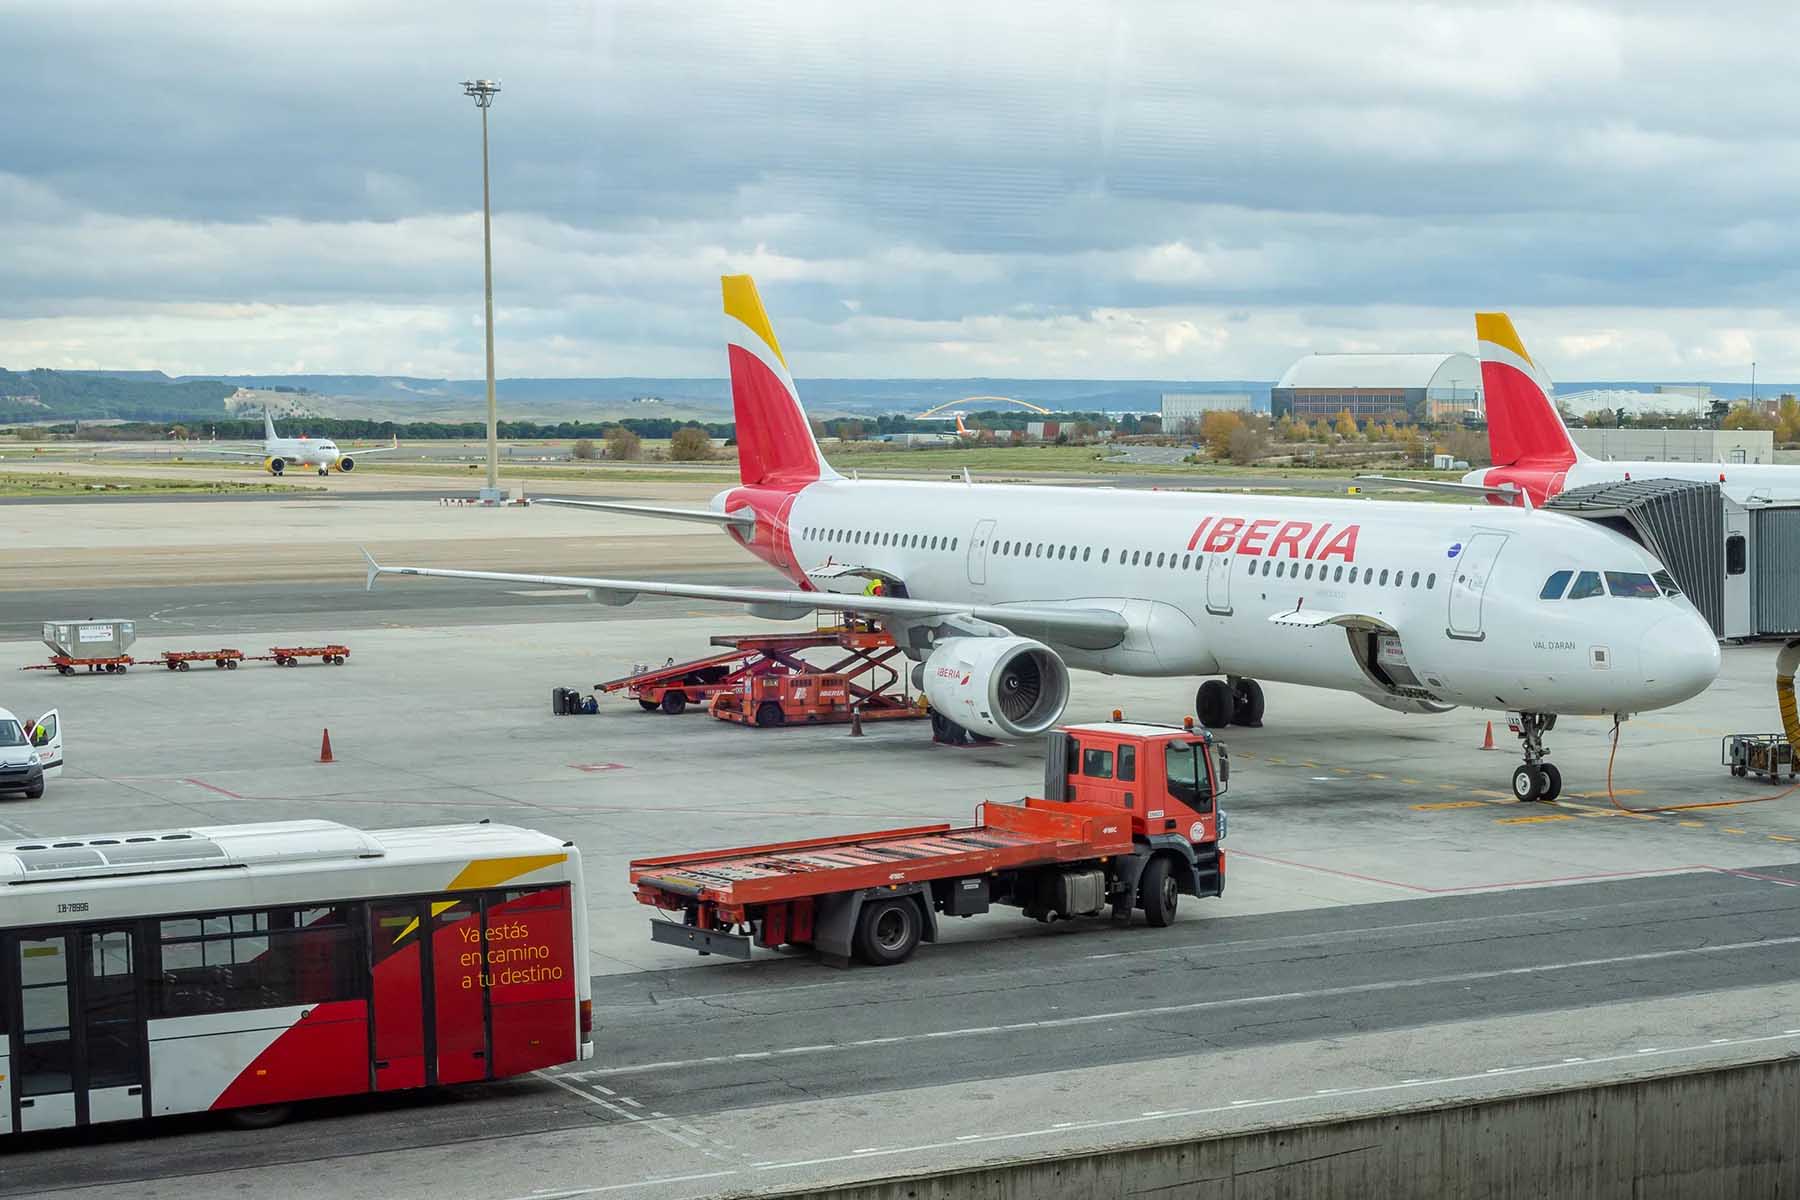 Iberia airplane standing on the runway.